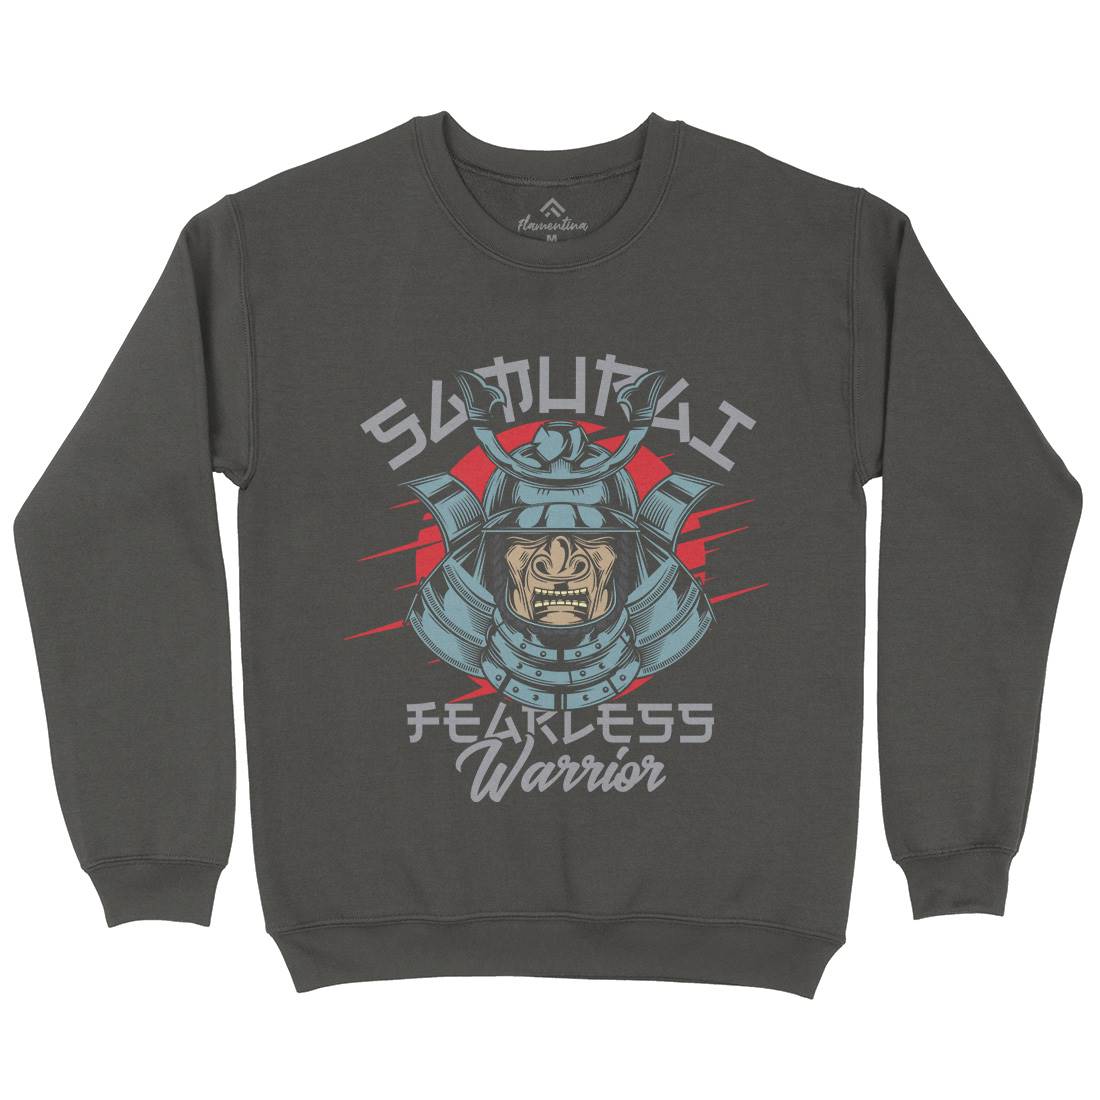 Samurai Mens Crew Neck Sweatshirt Warriors C884